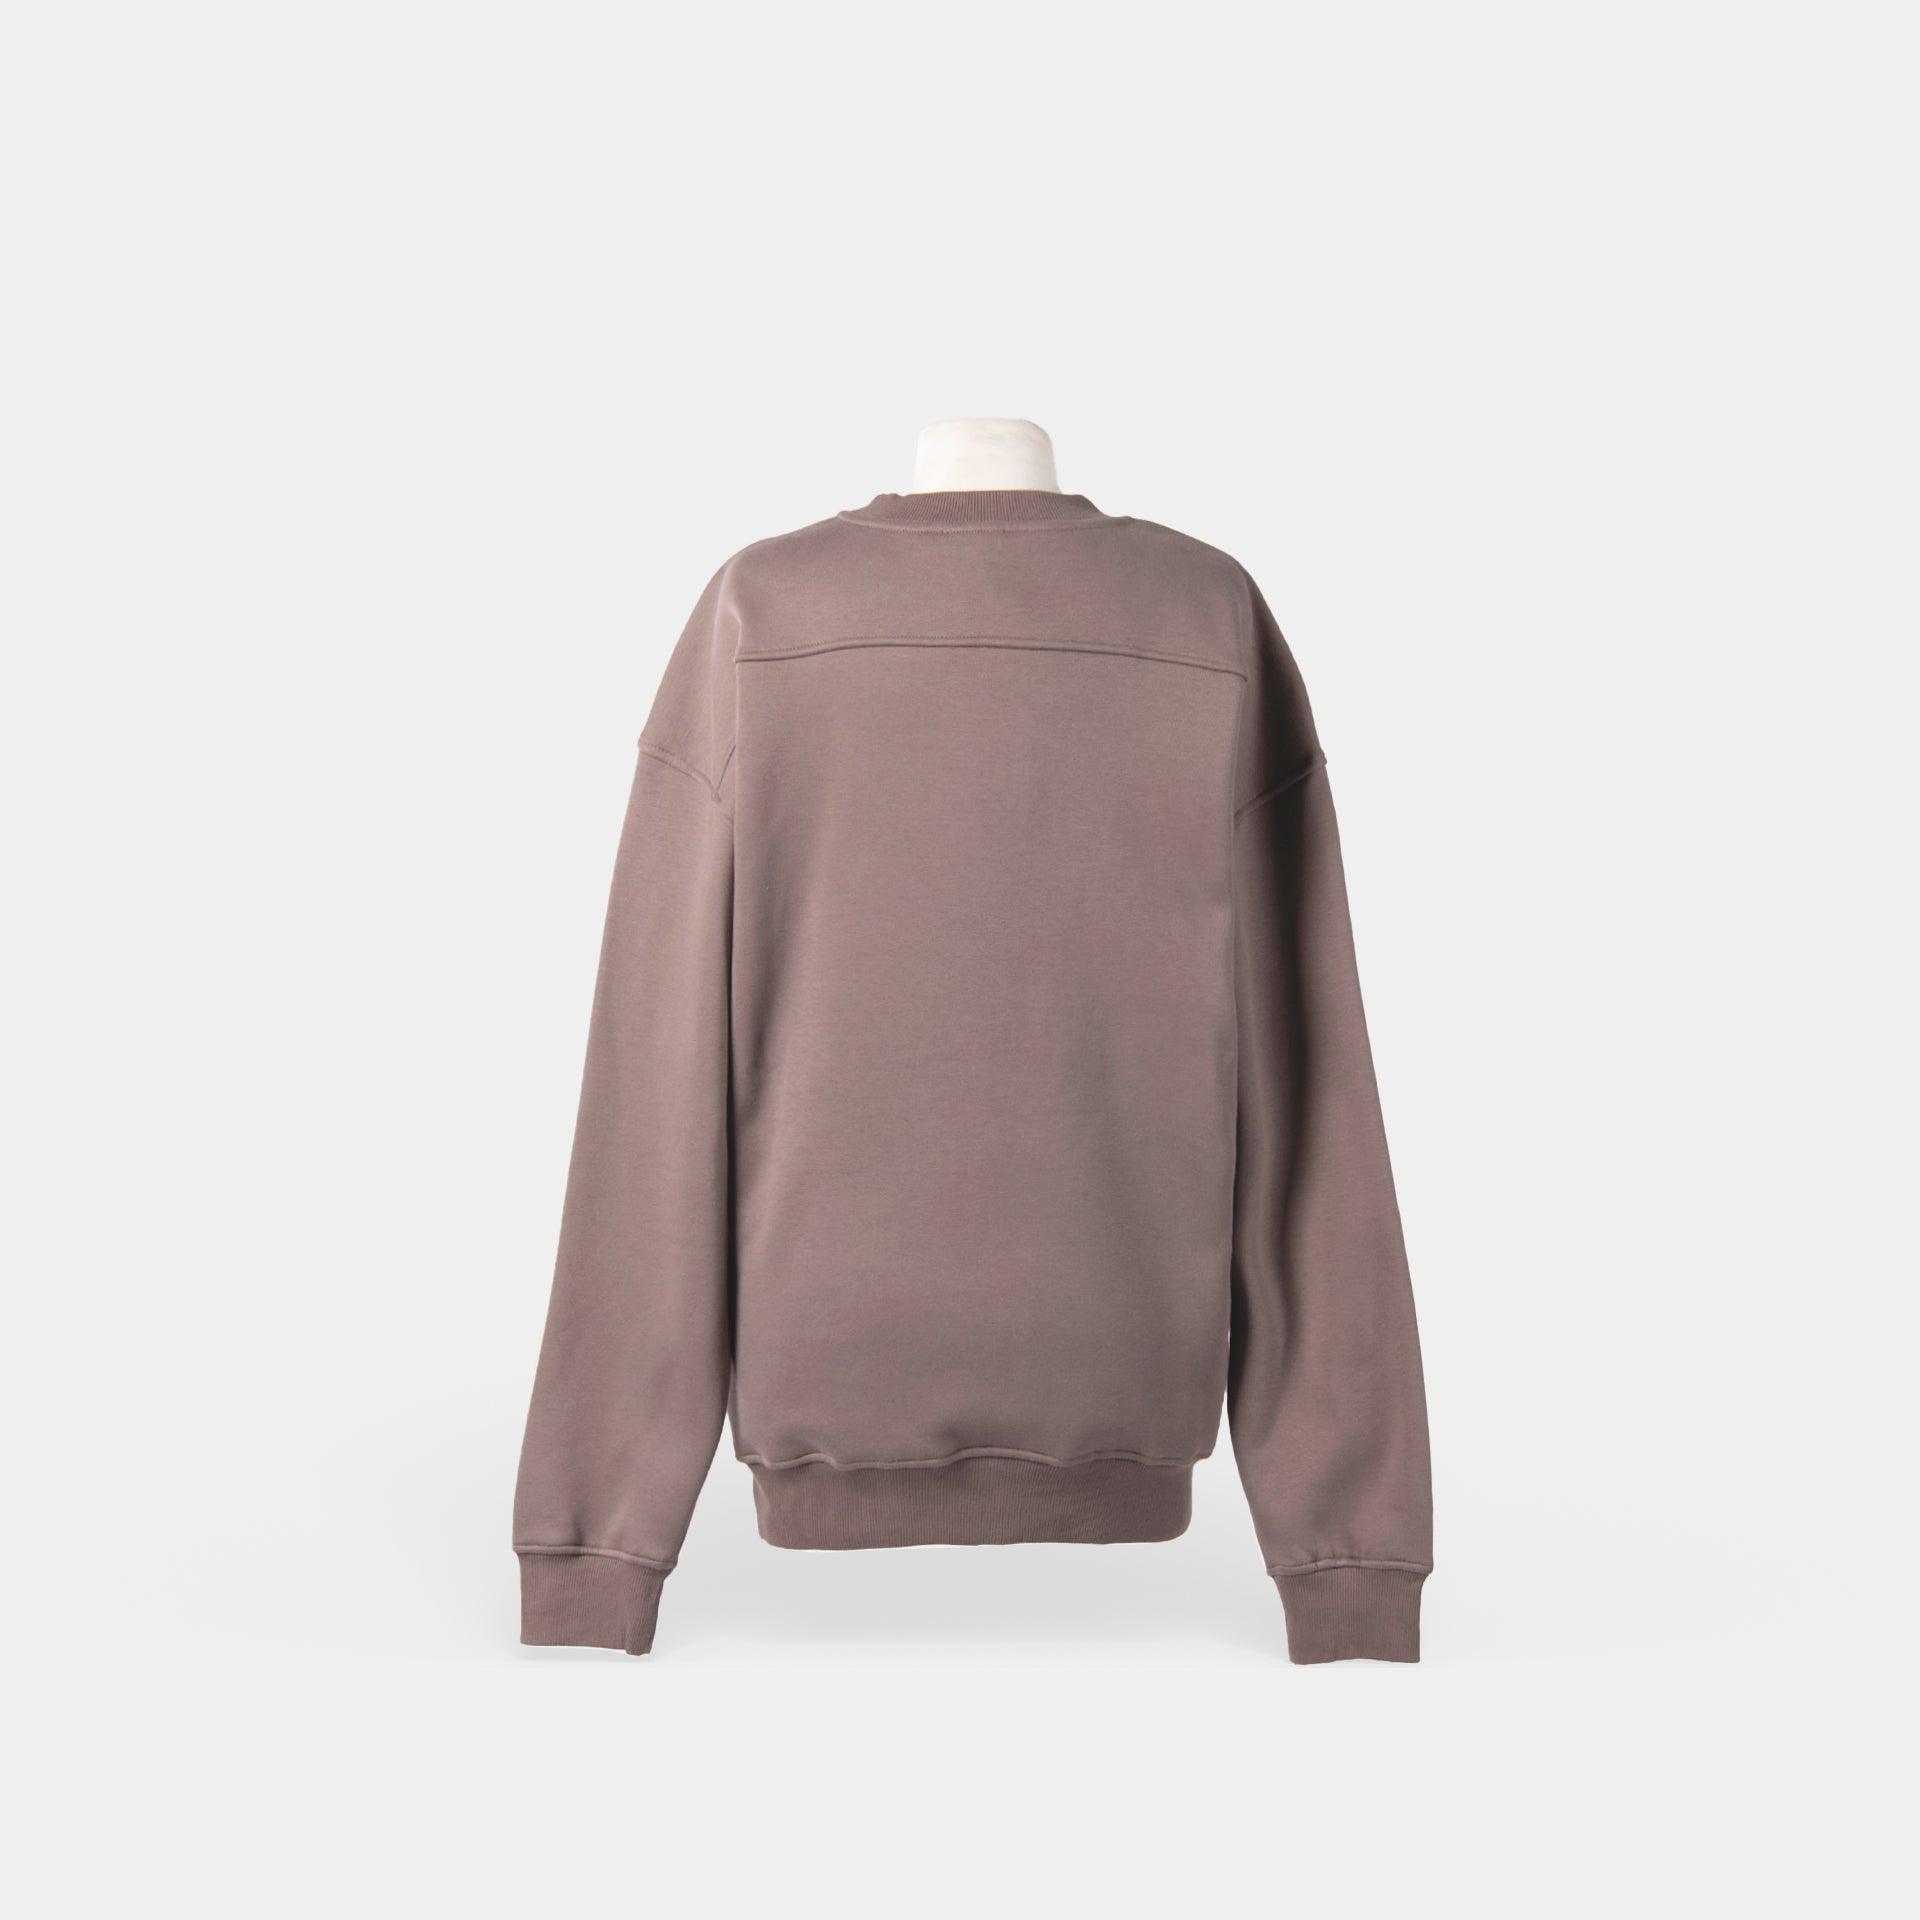 Brown Sweatshirt From Z Brand - WECRE8